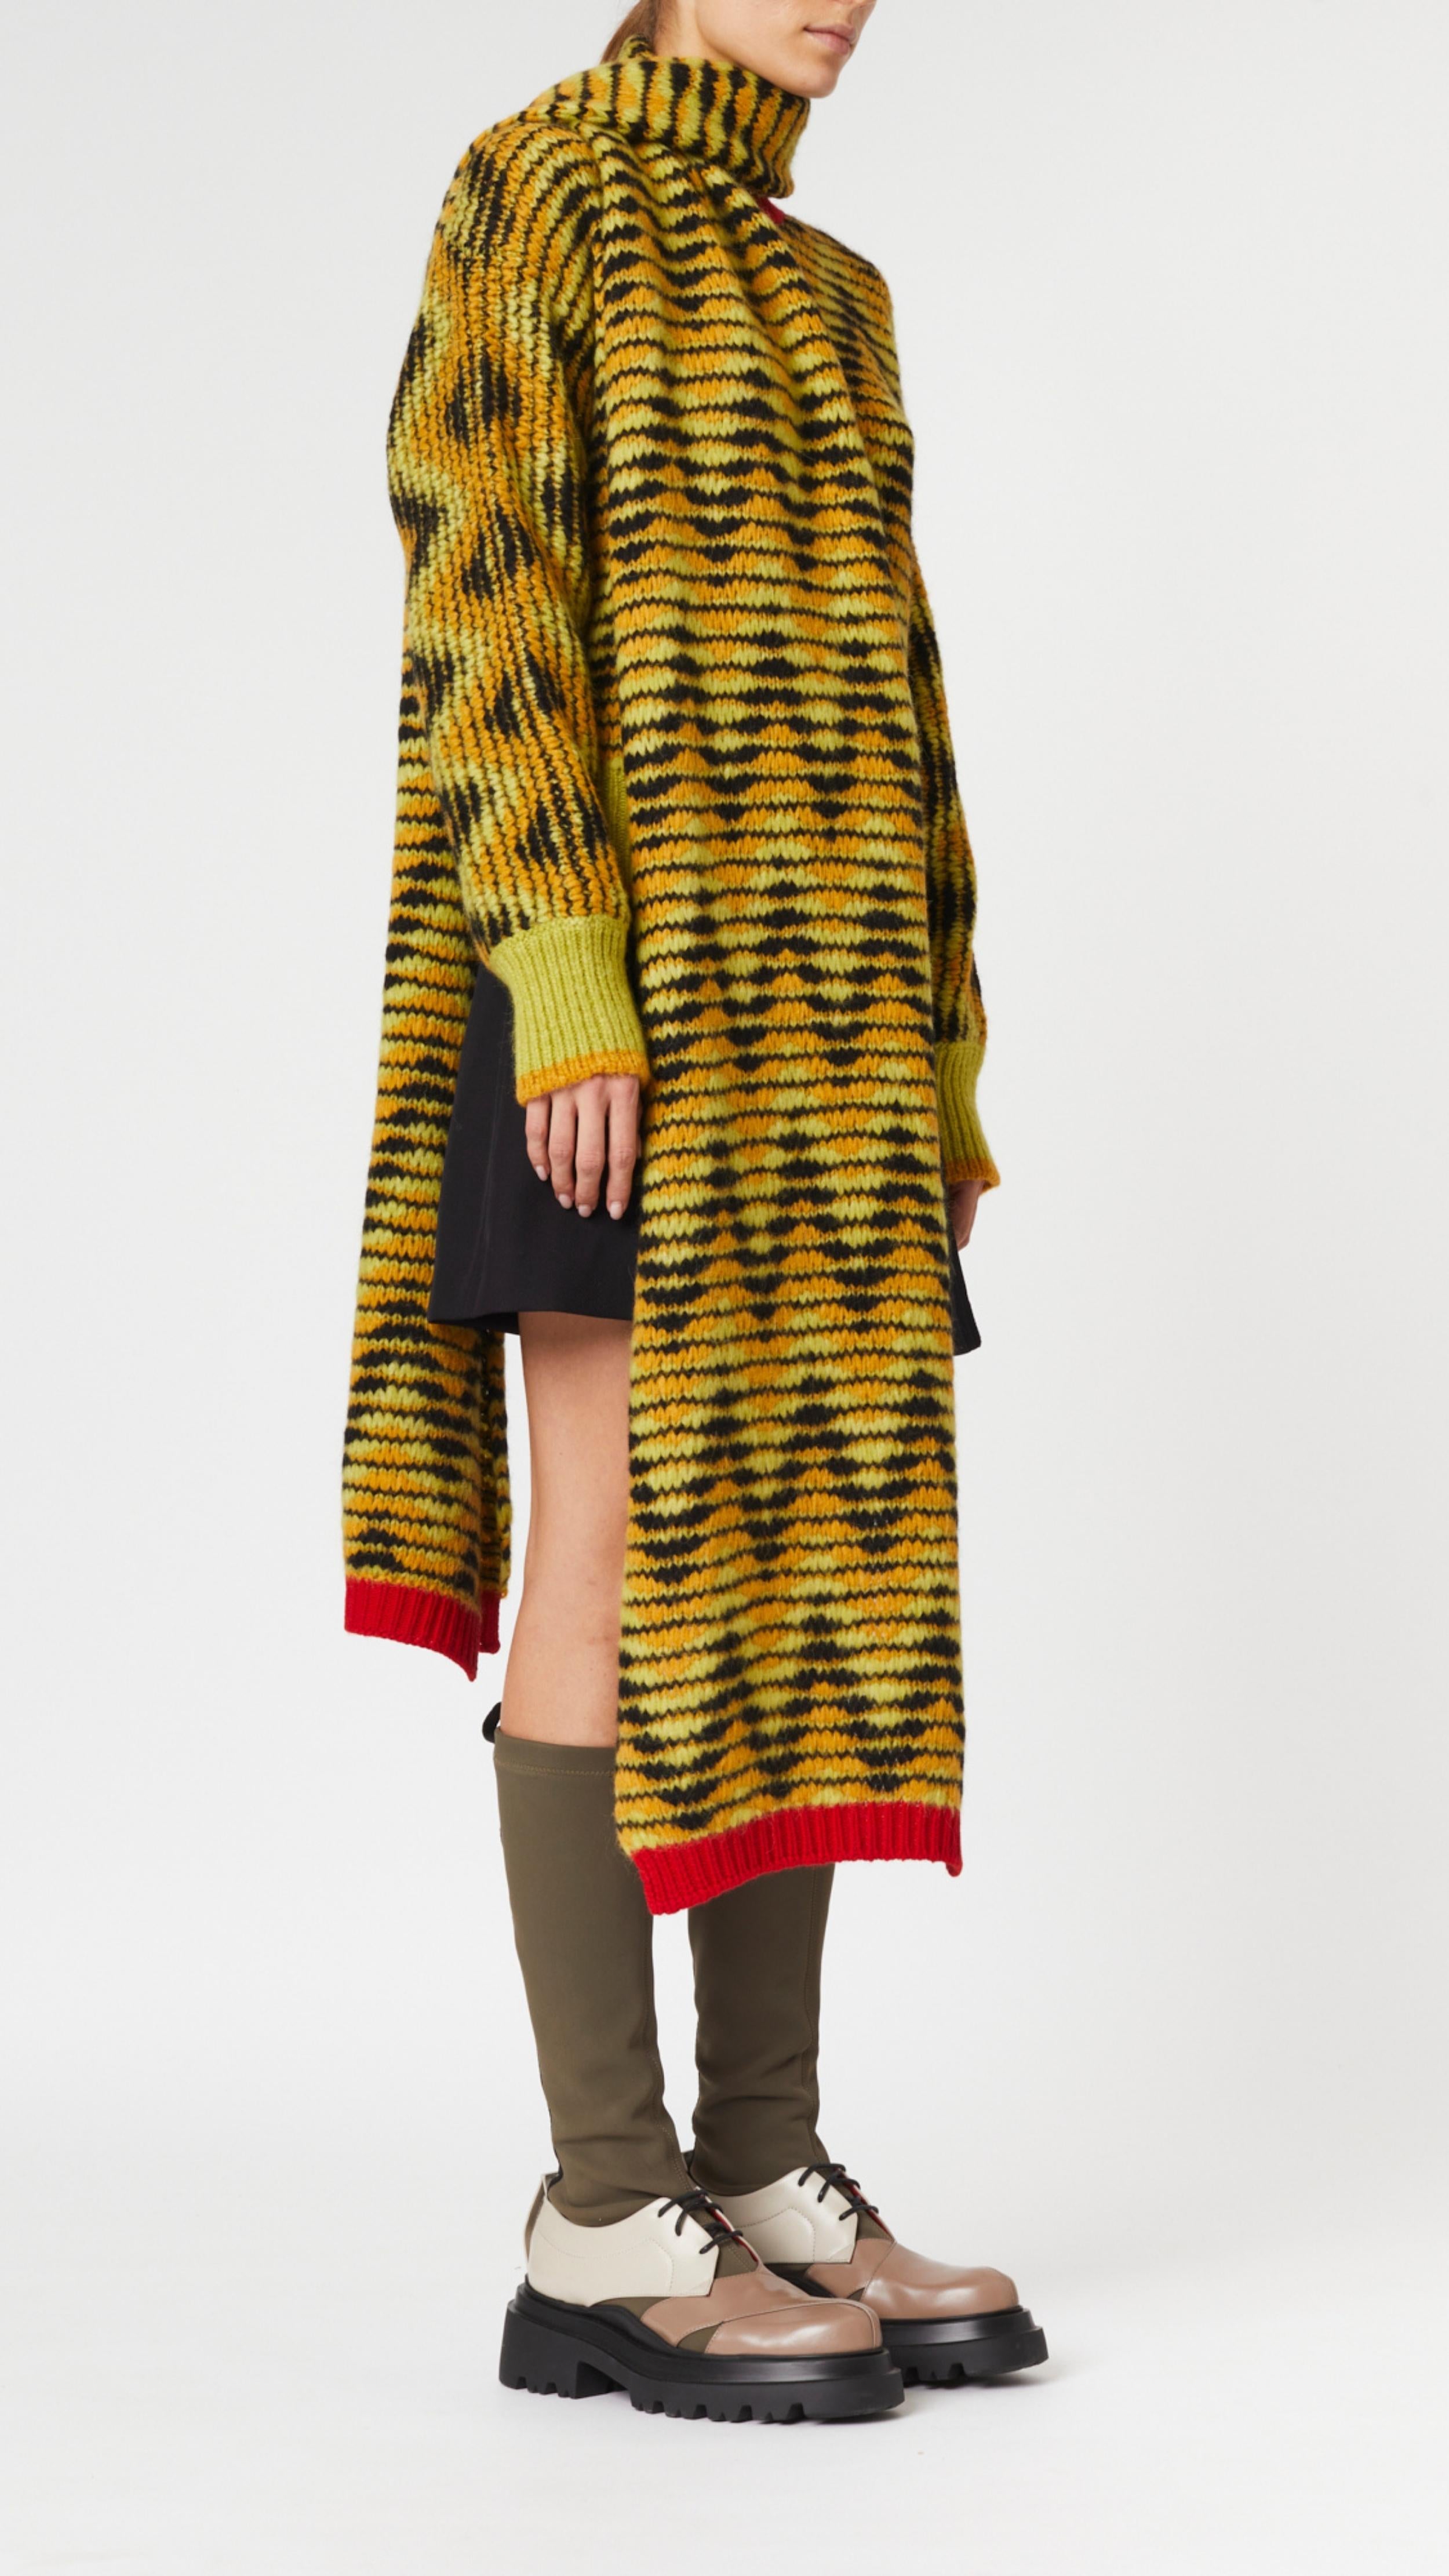 Printed Jacquard-Knit Sweatshirt